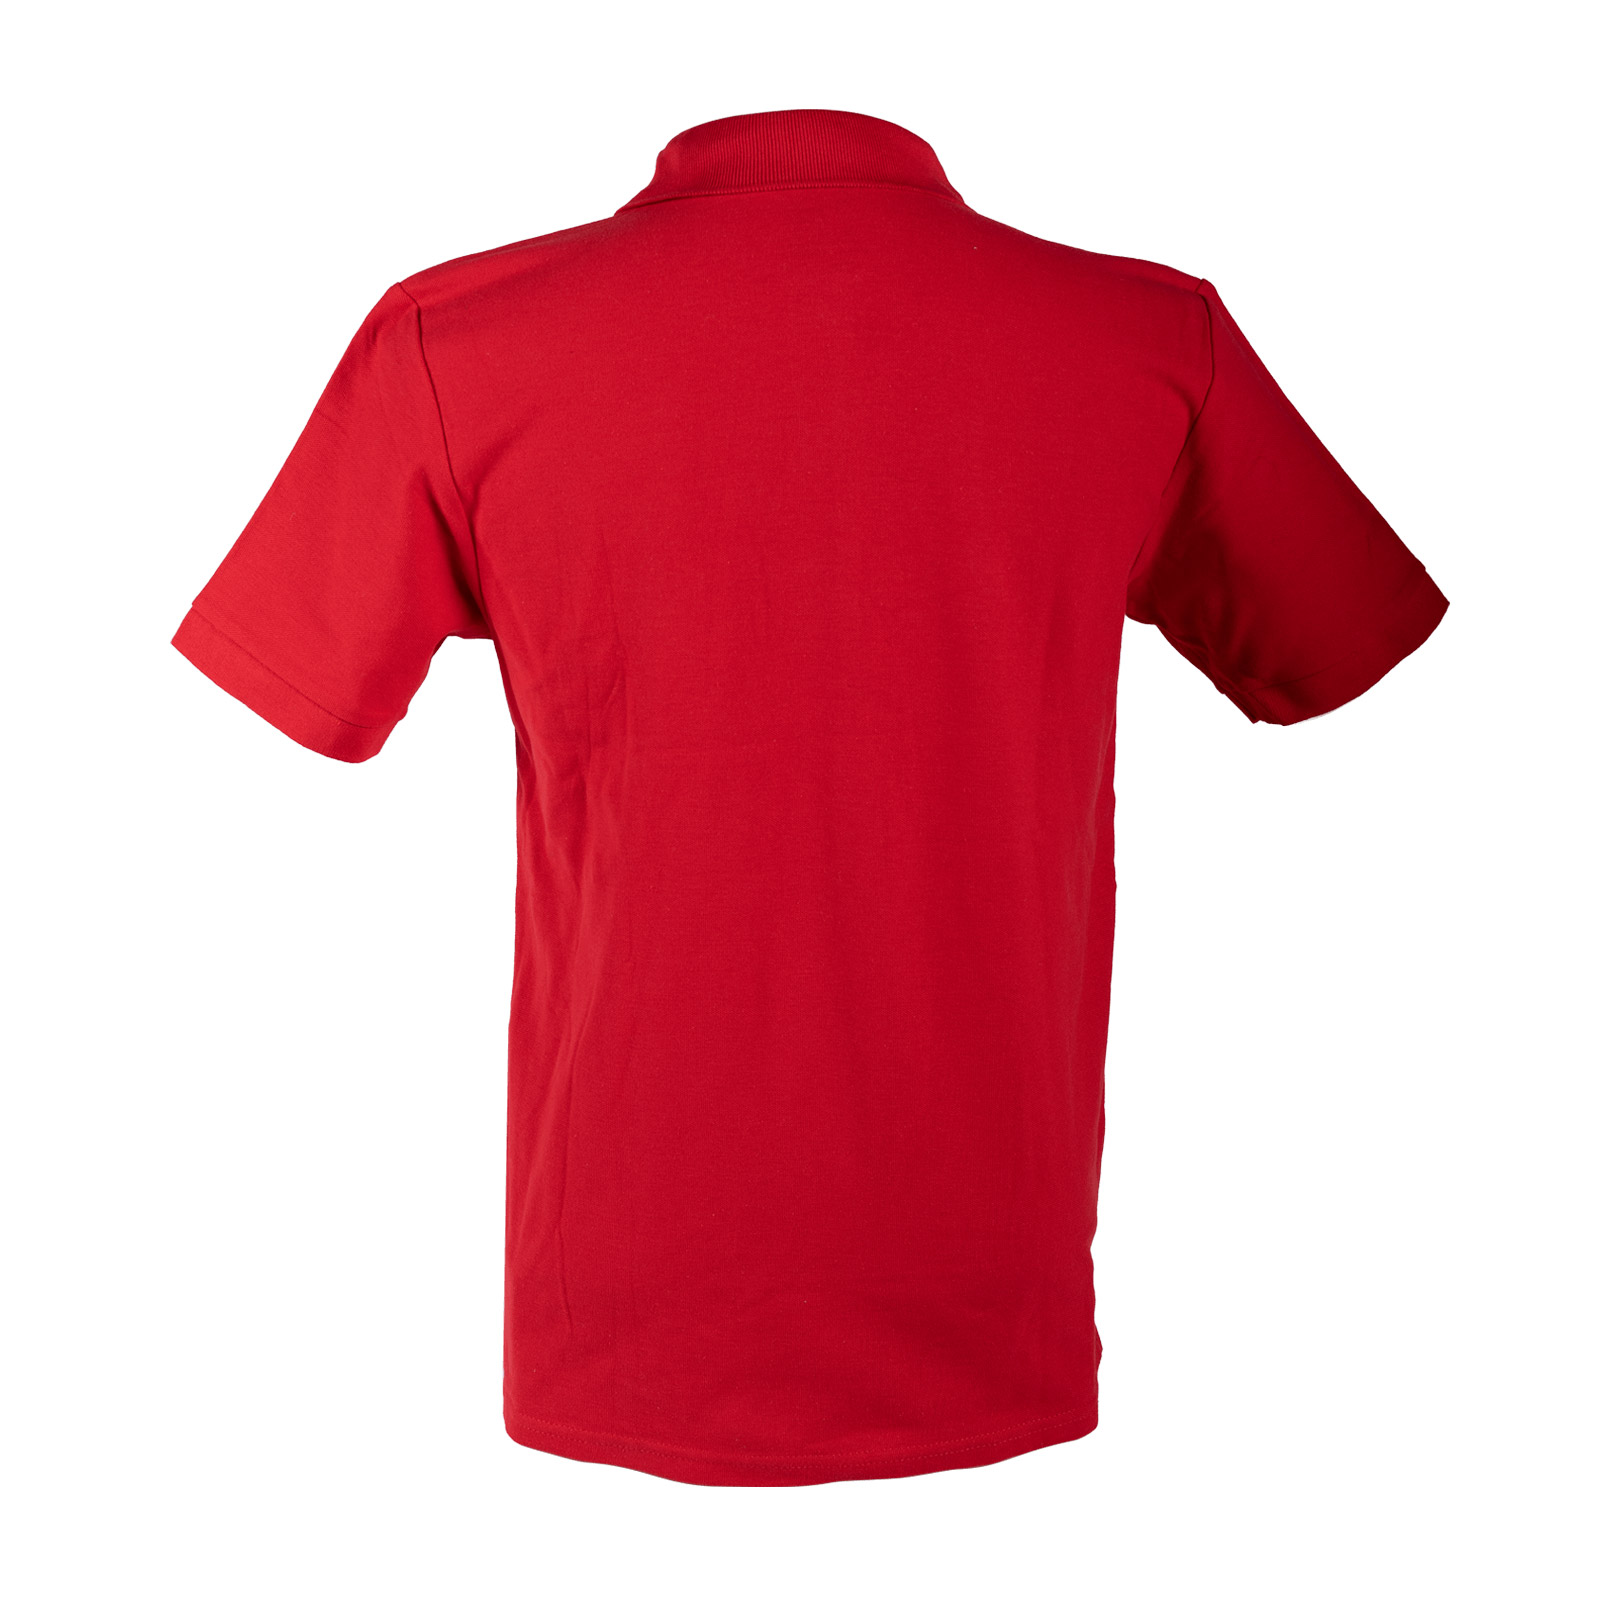 Polo shirt, red, 100% organic cotton